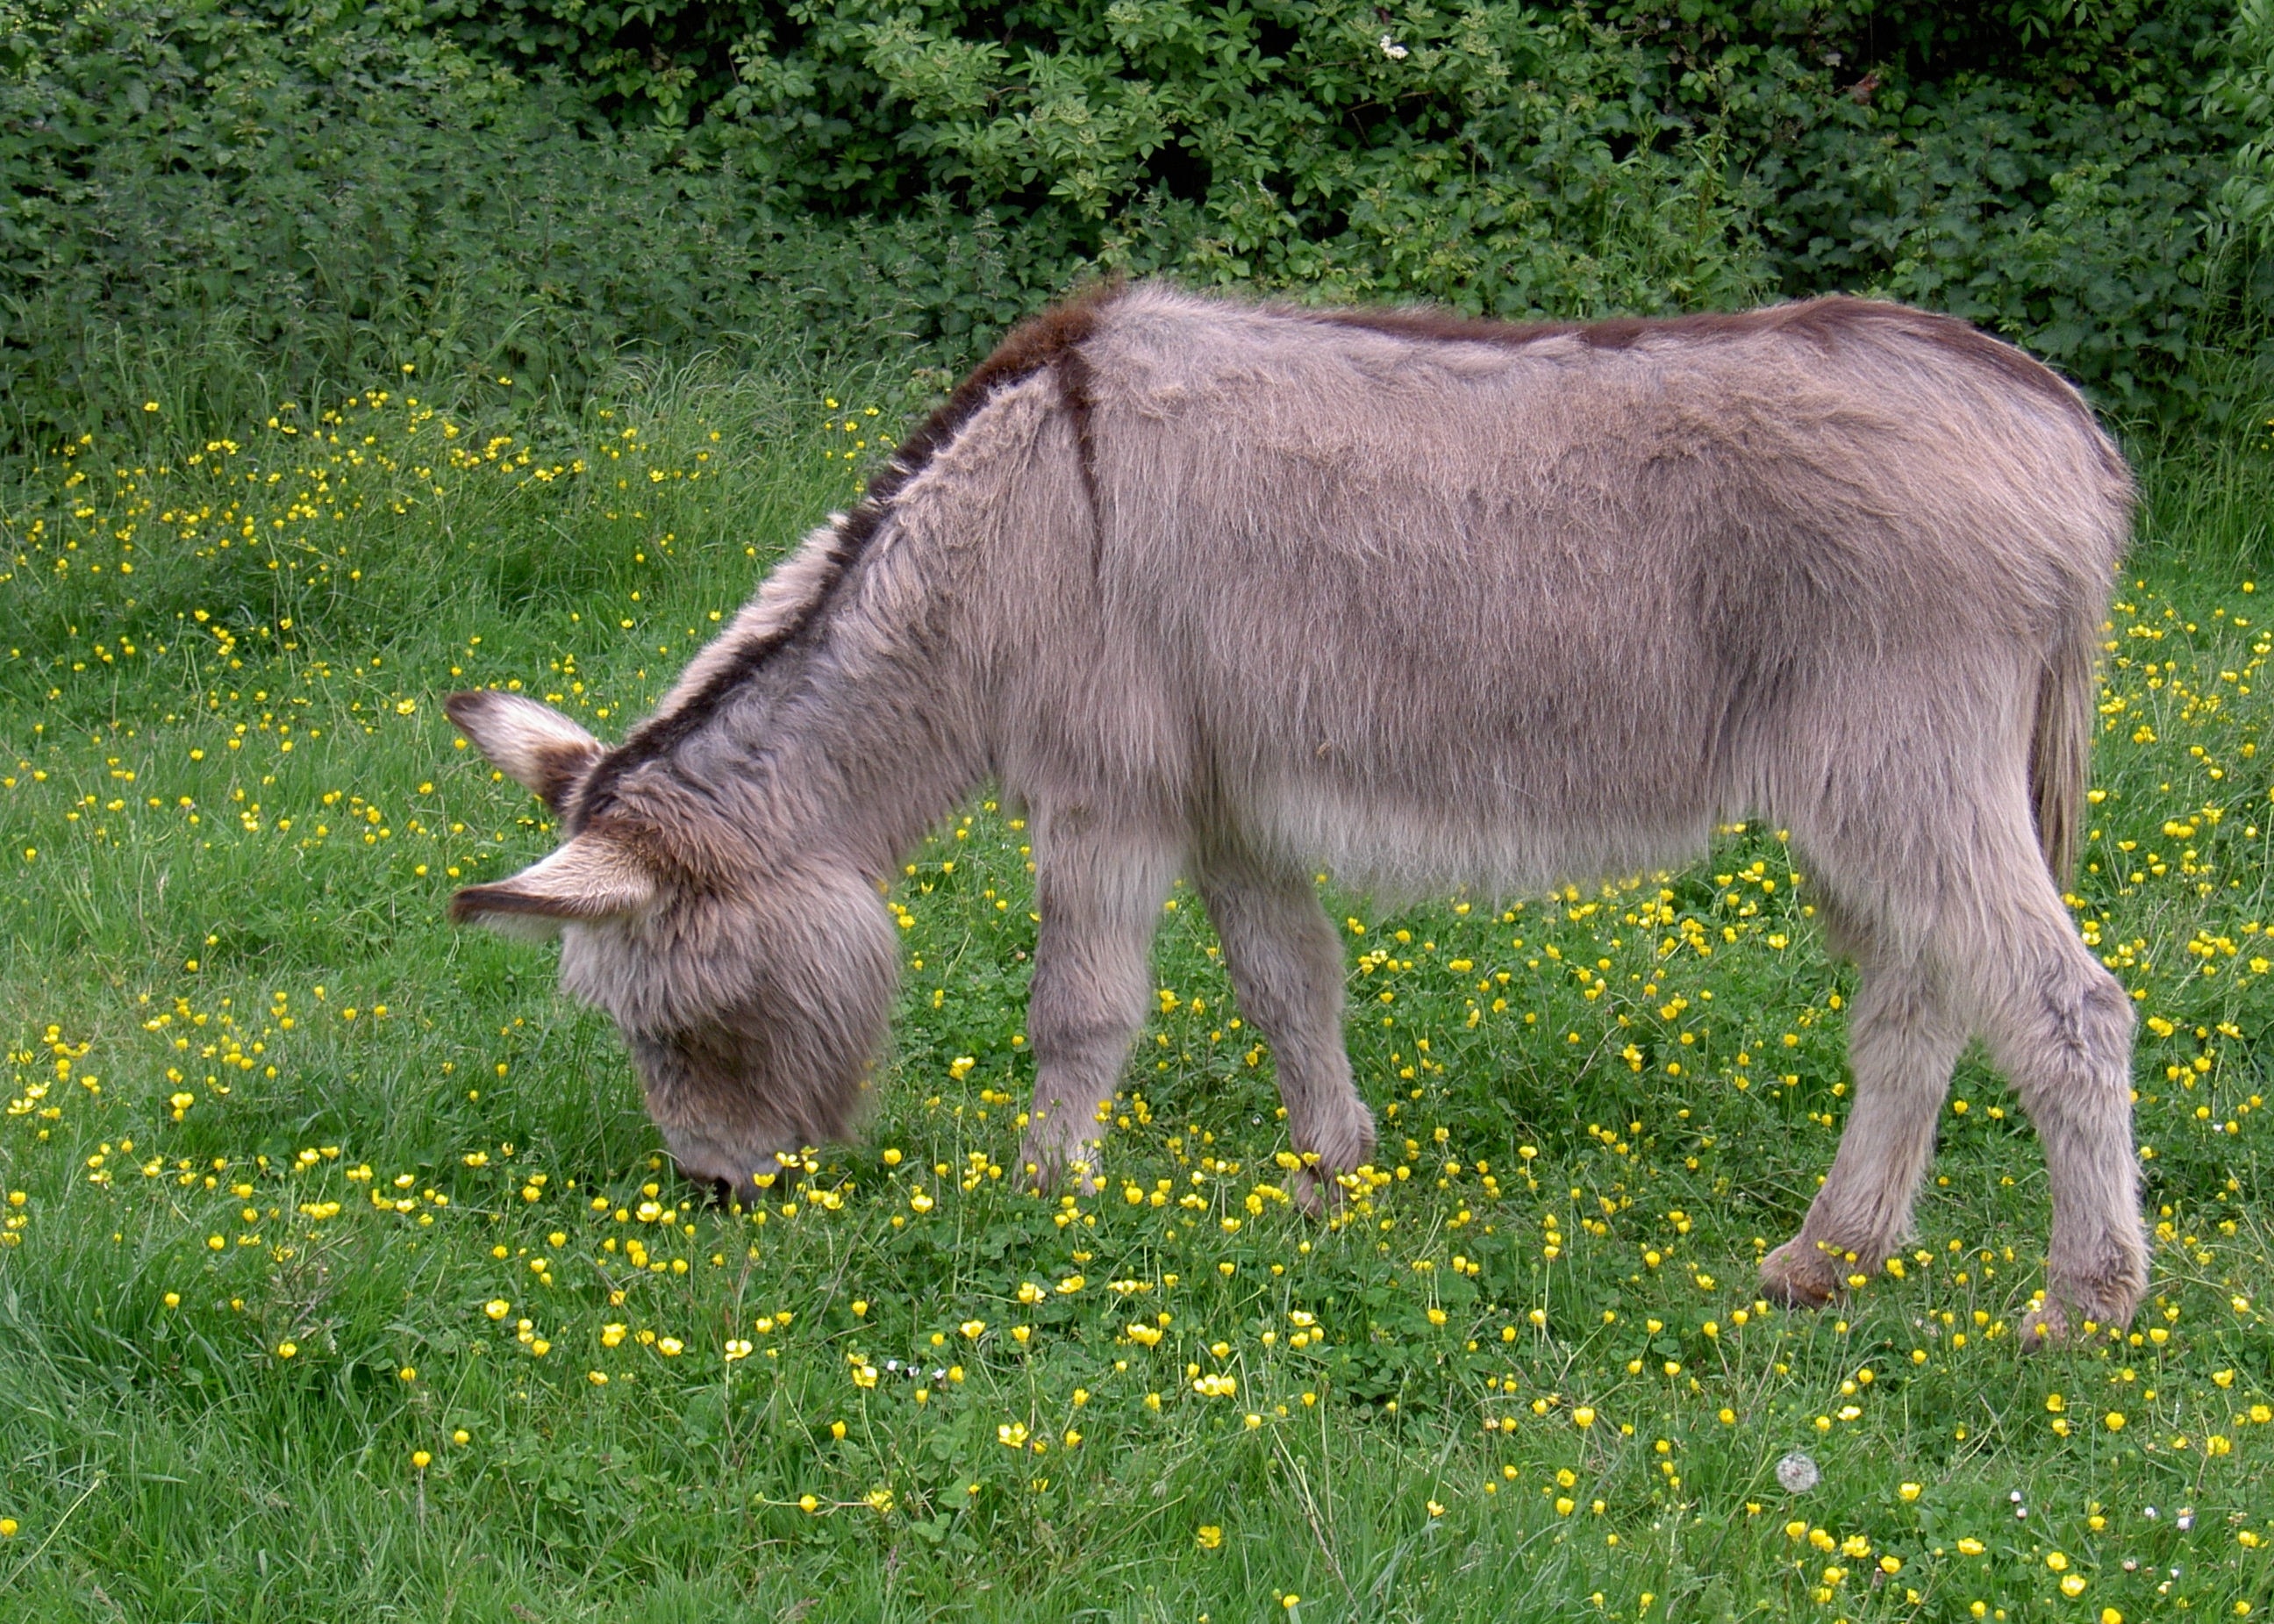 Donkey, Ass, Equus Africanus Somaliensis, grass, animal themes